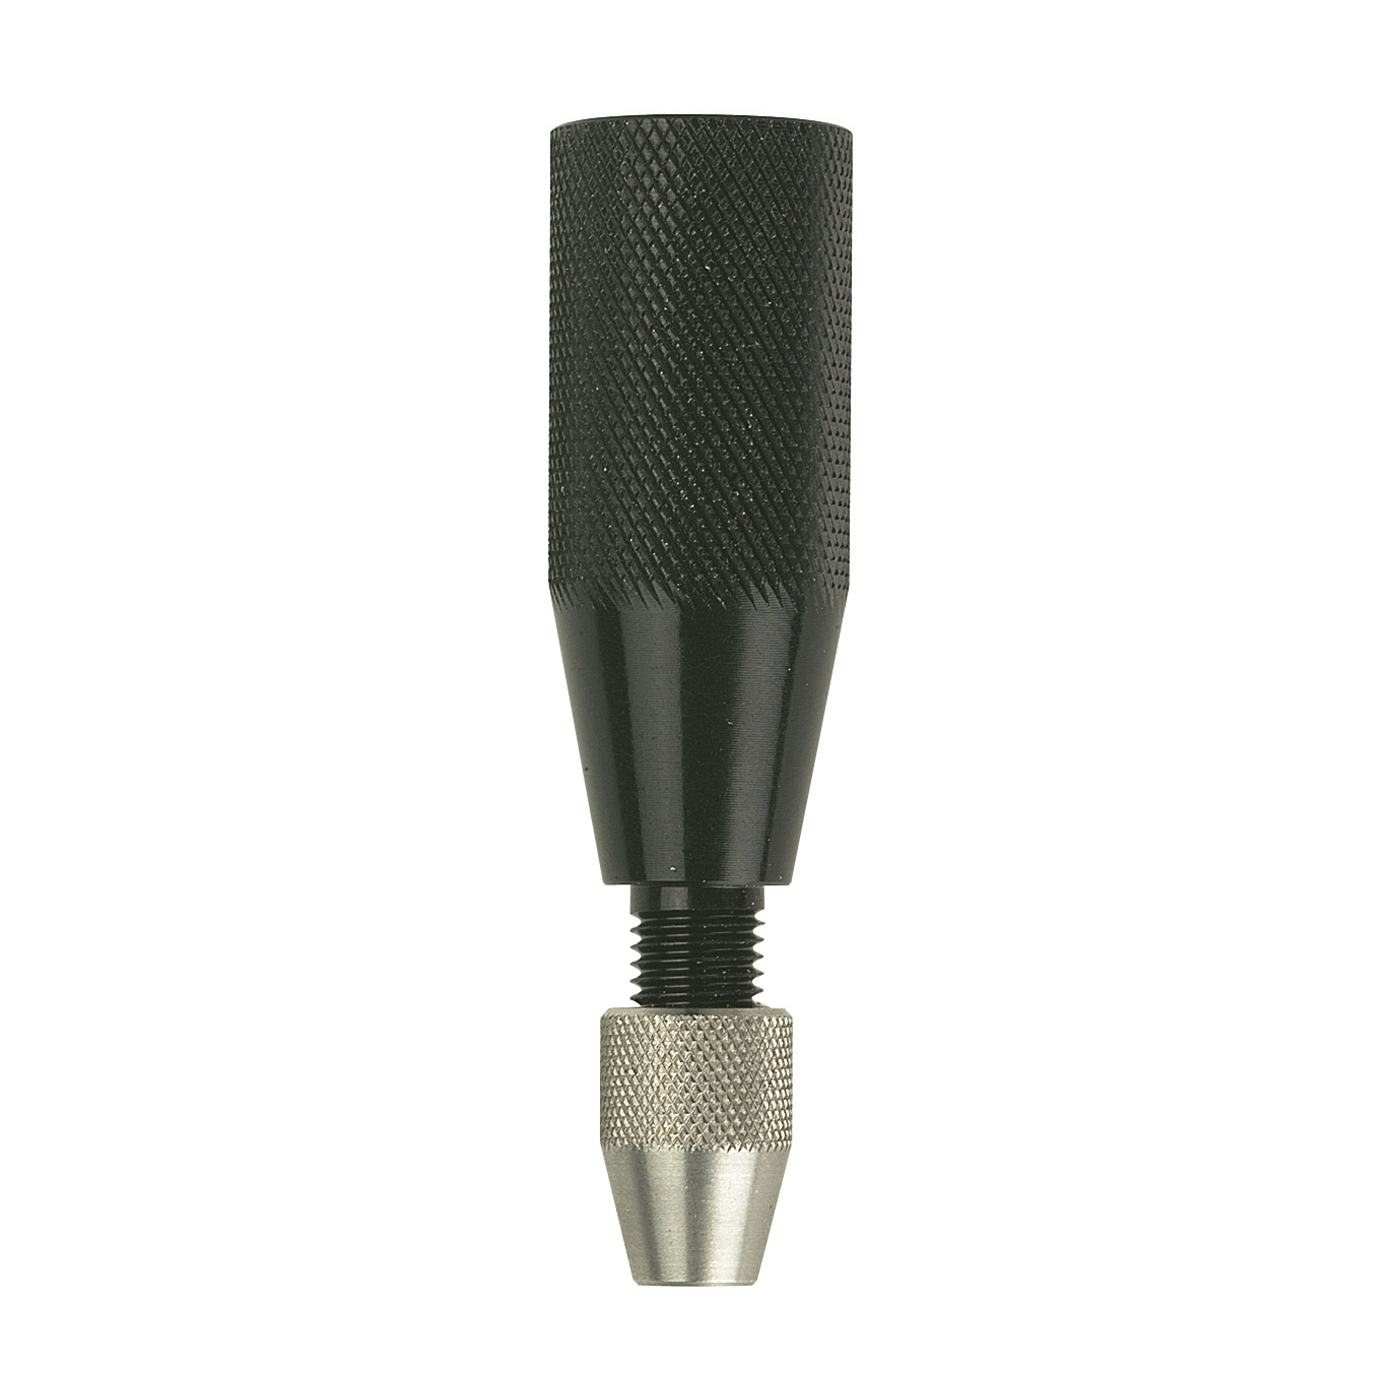 Alucolor Spindle Adapter, Black - 1 piece